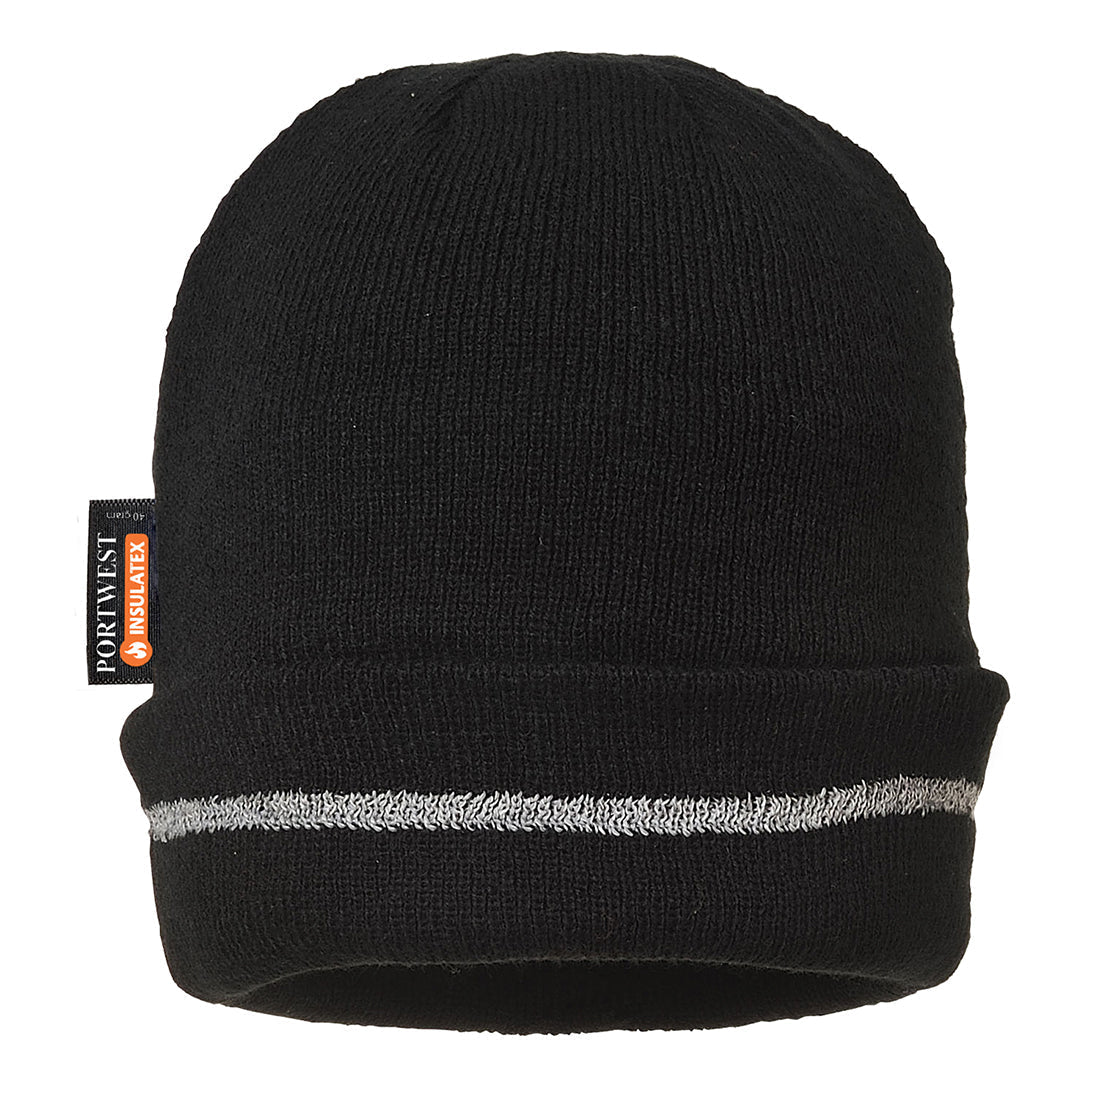 Portwest B023 Reflective Trim Knit Hat Insulatex Lined 1#colour_black